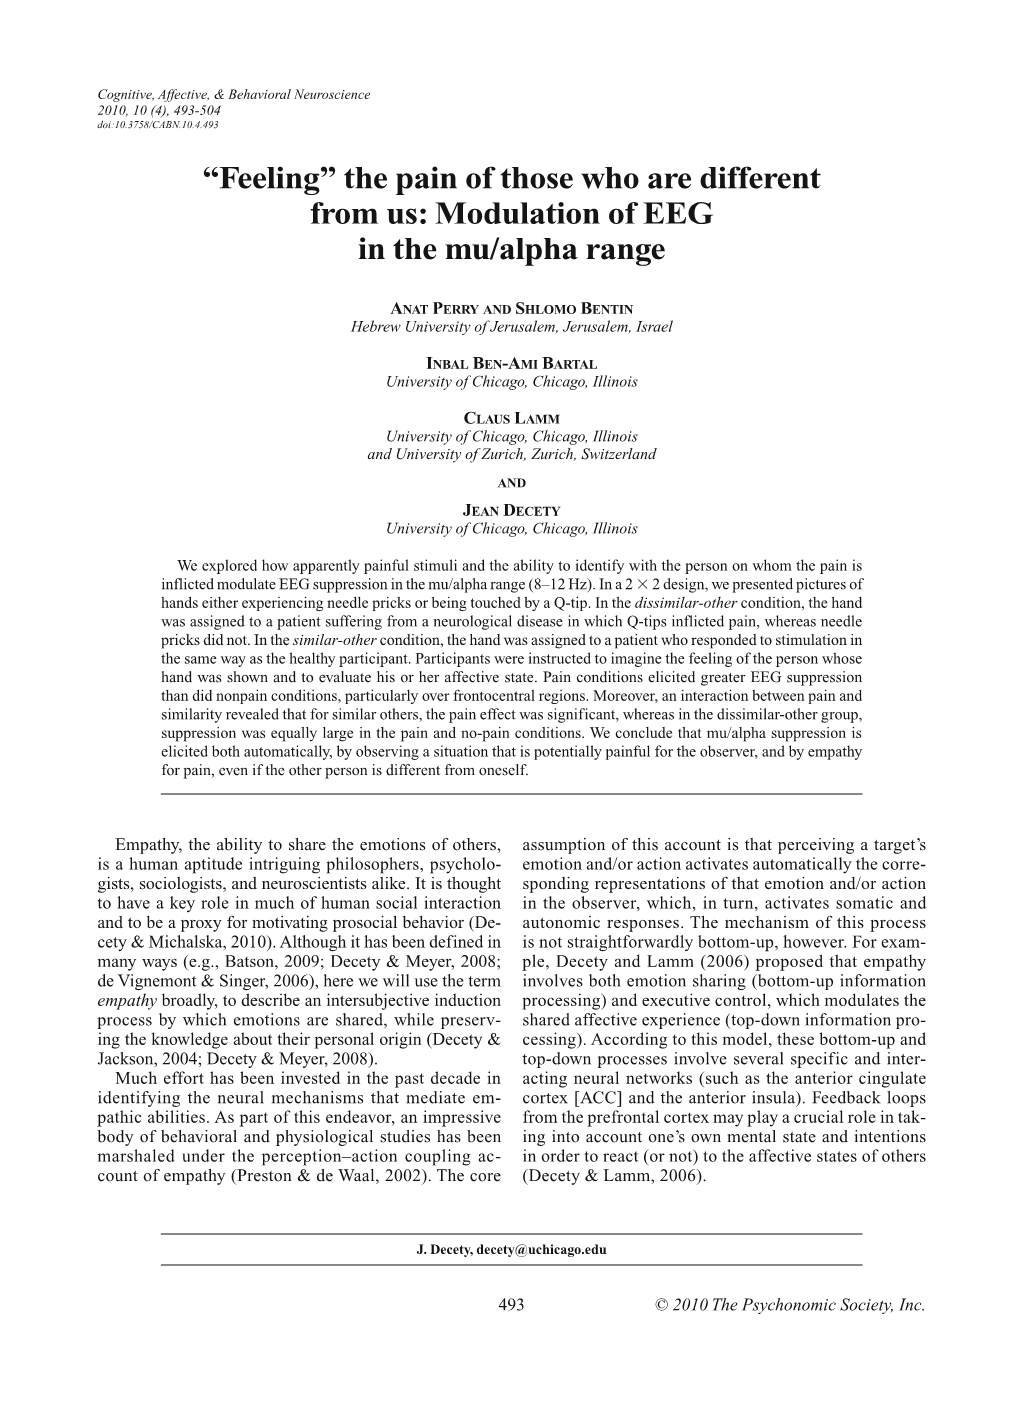 Modulation of EEG in the Mu/Alpha Range